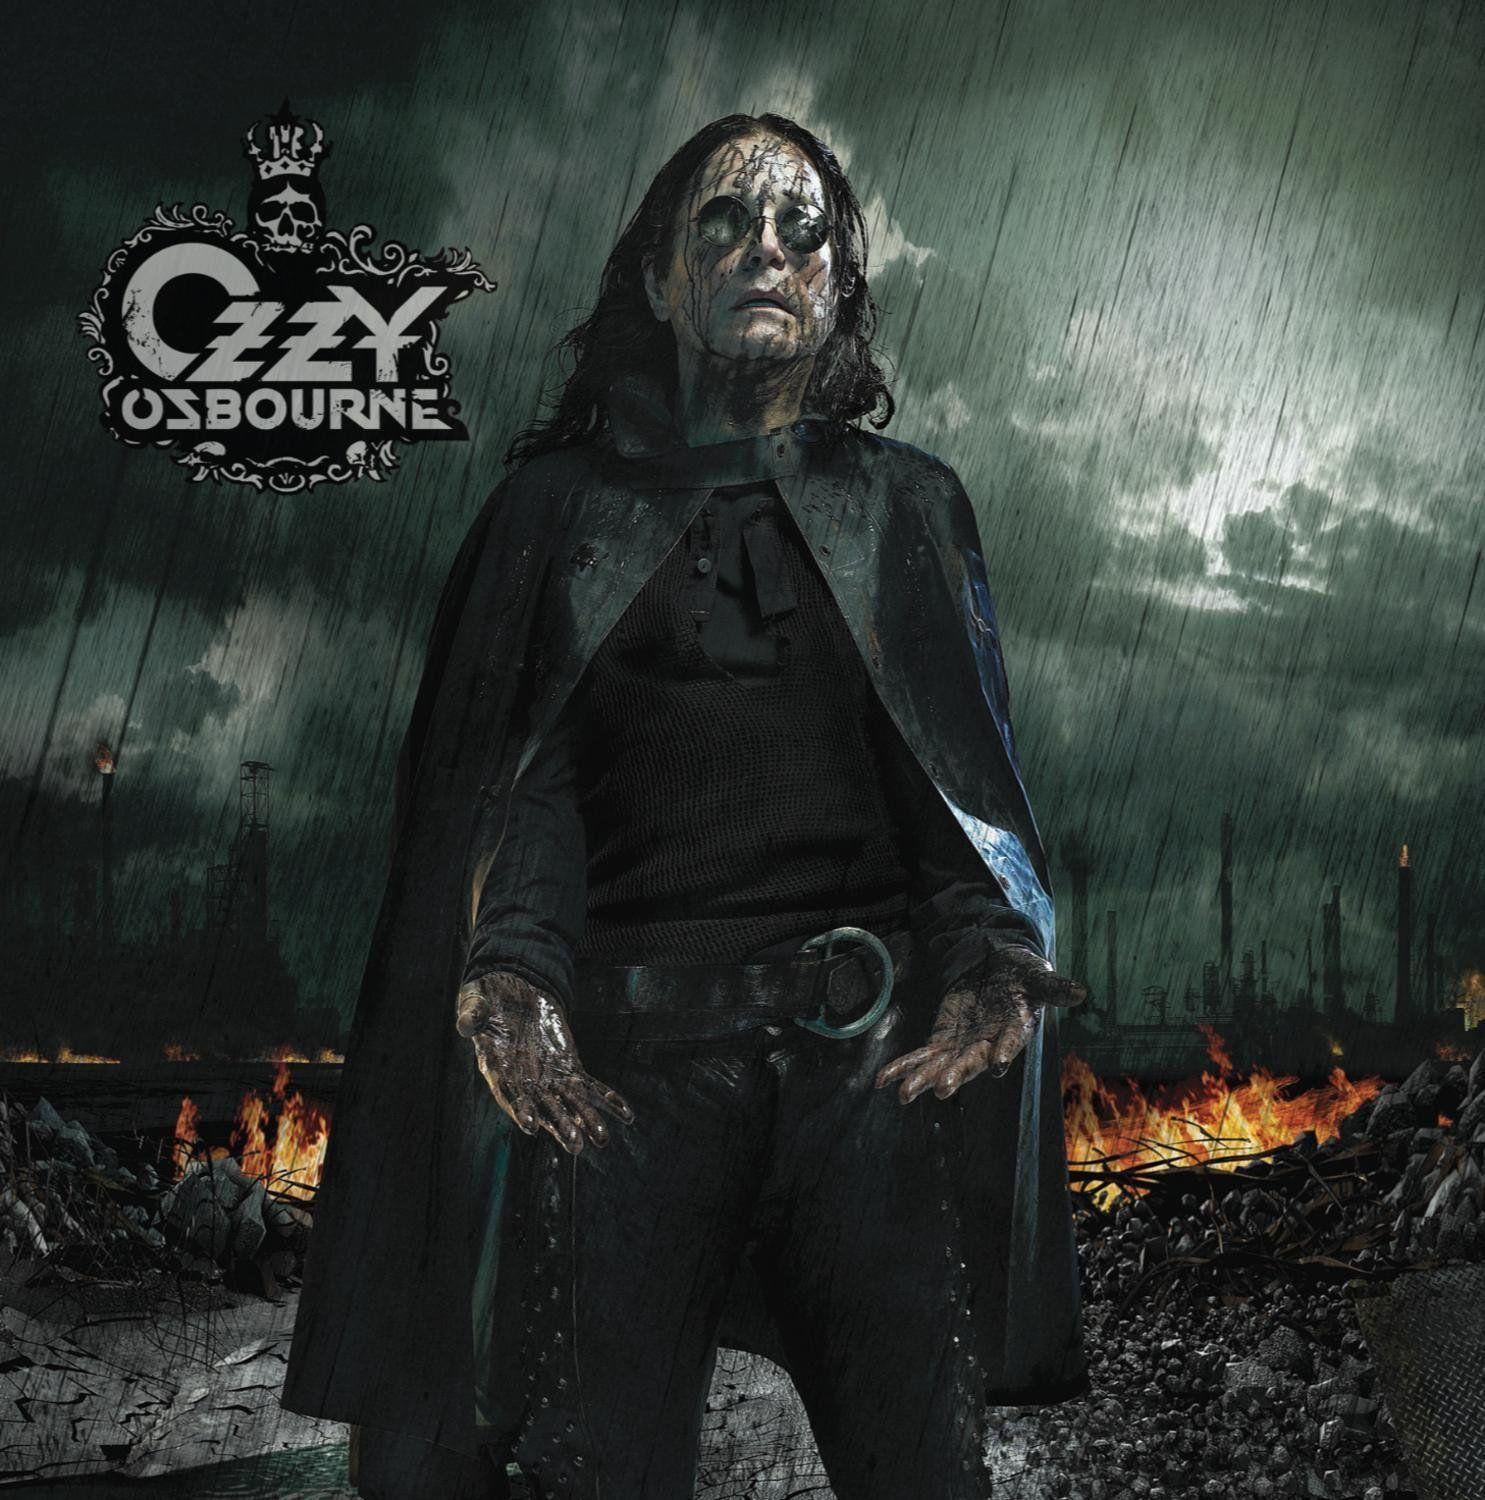 Ozzy Osbourne Rain.com Music